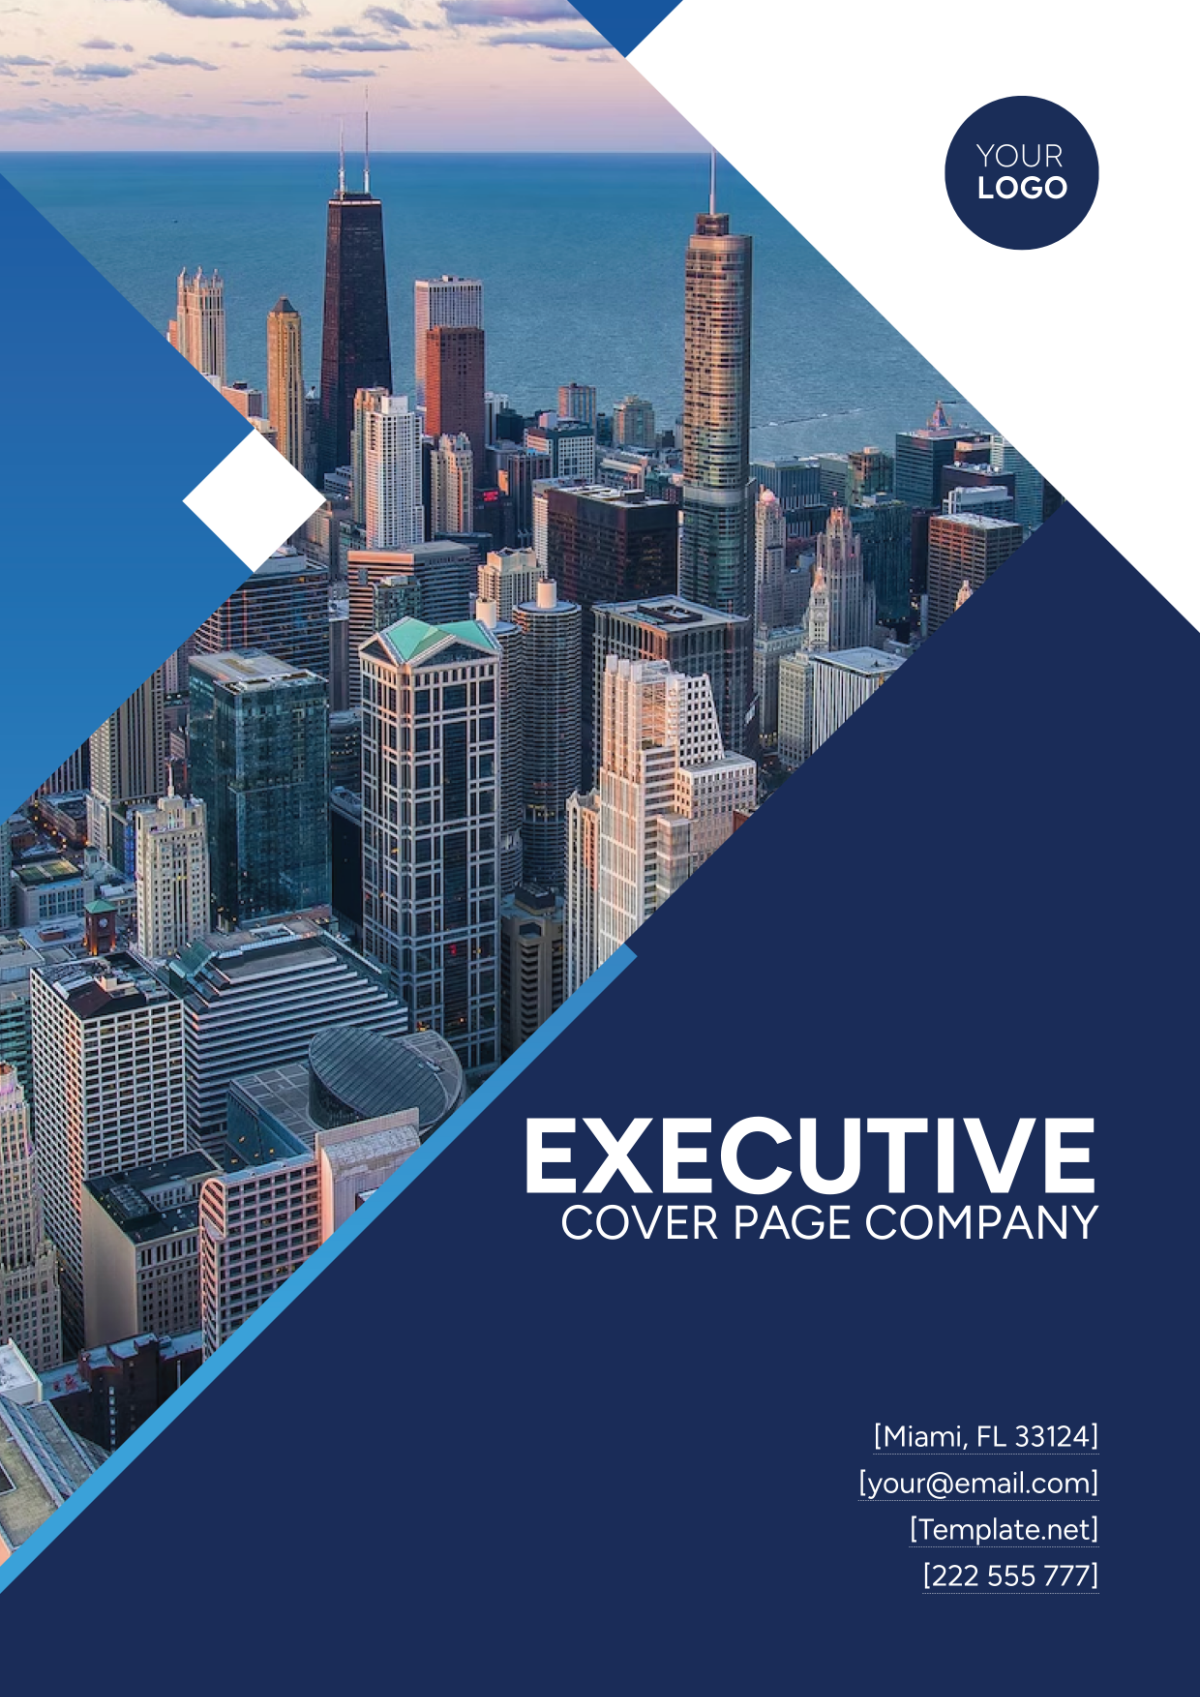 Executive Cover Page Company